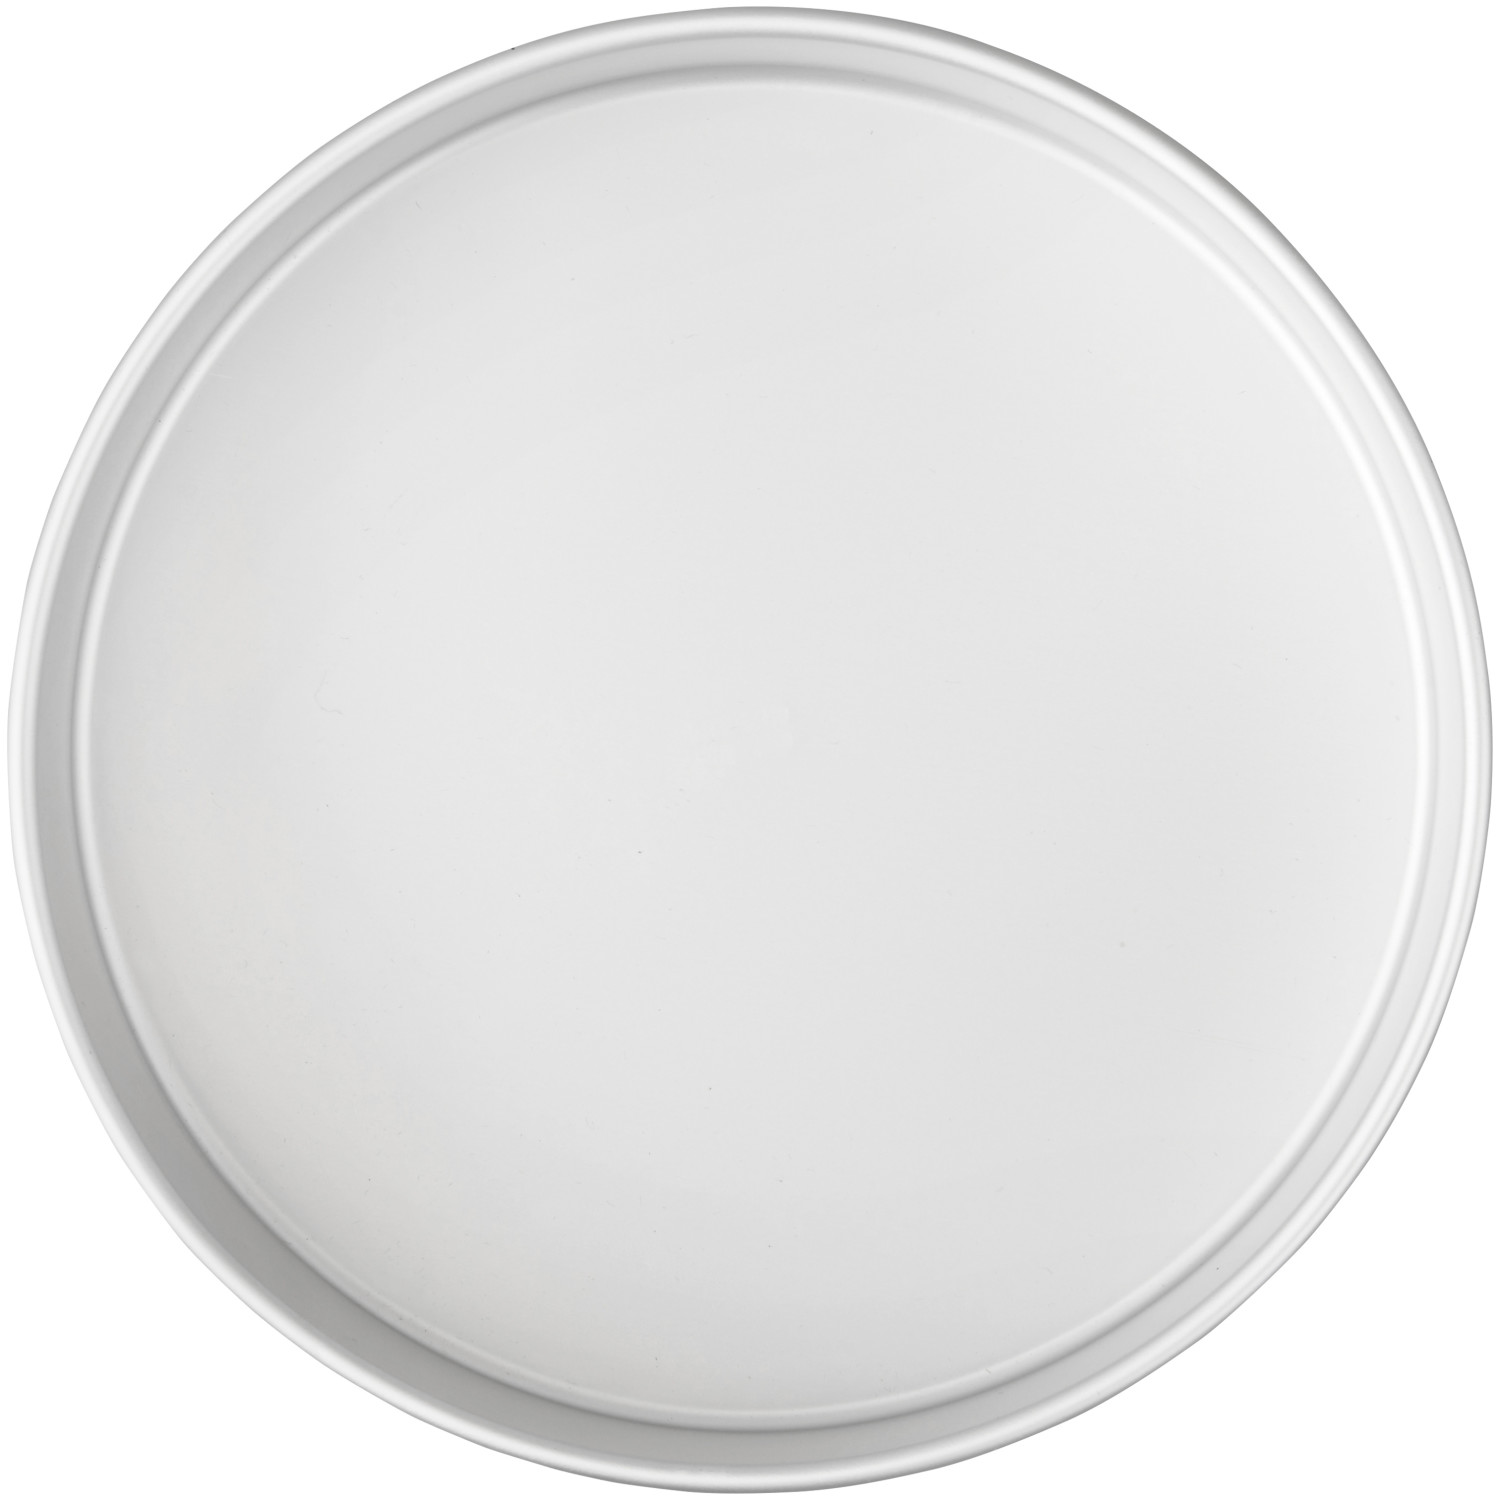  Wilton Decorator Preferred Aluminum Round Cake Pan, 14 x 3-Inch:  Home & Kitchen